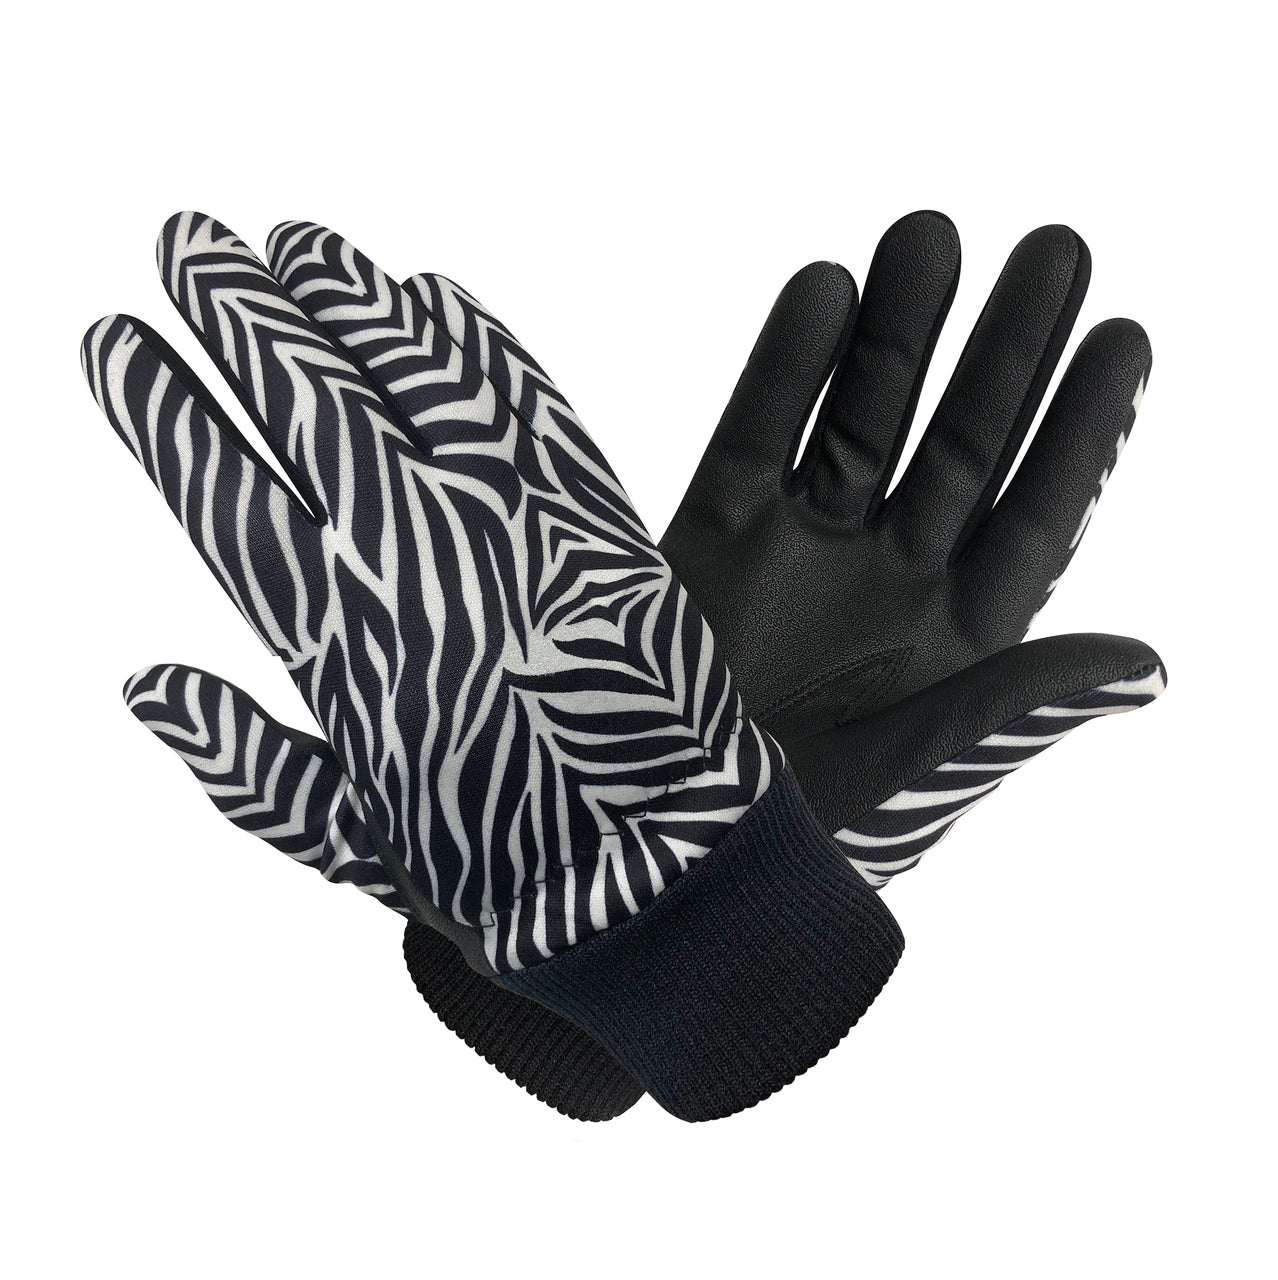 Surprizeshop Ladies Polar Stretch Thermal Glove in Black Zebra Print